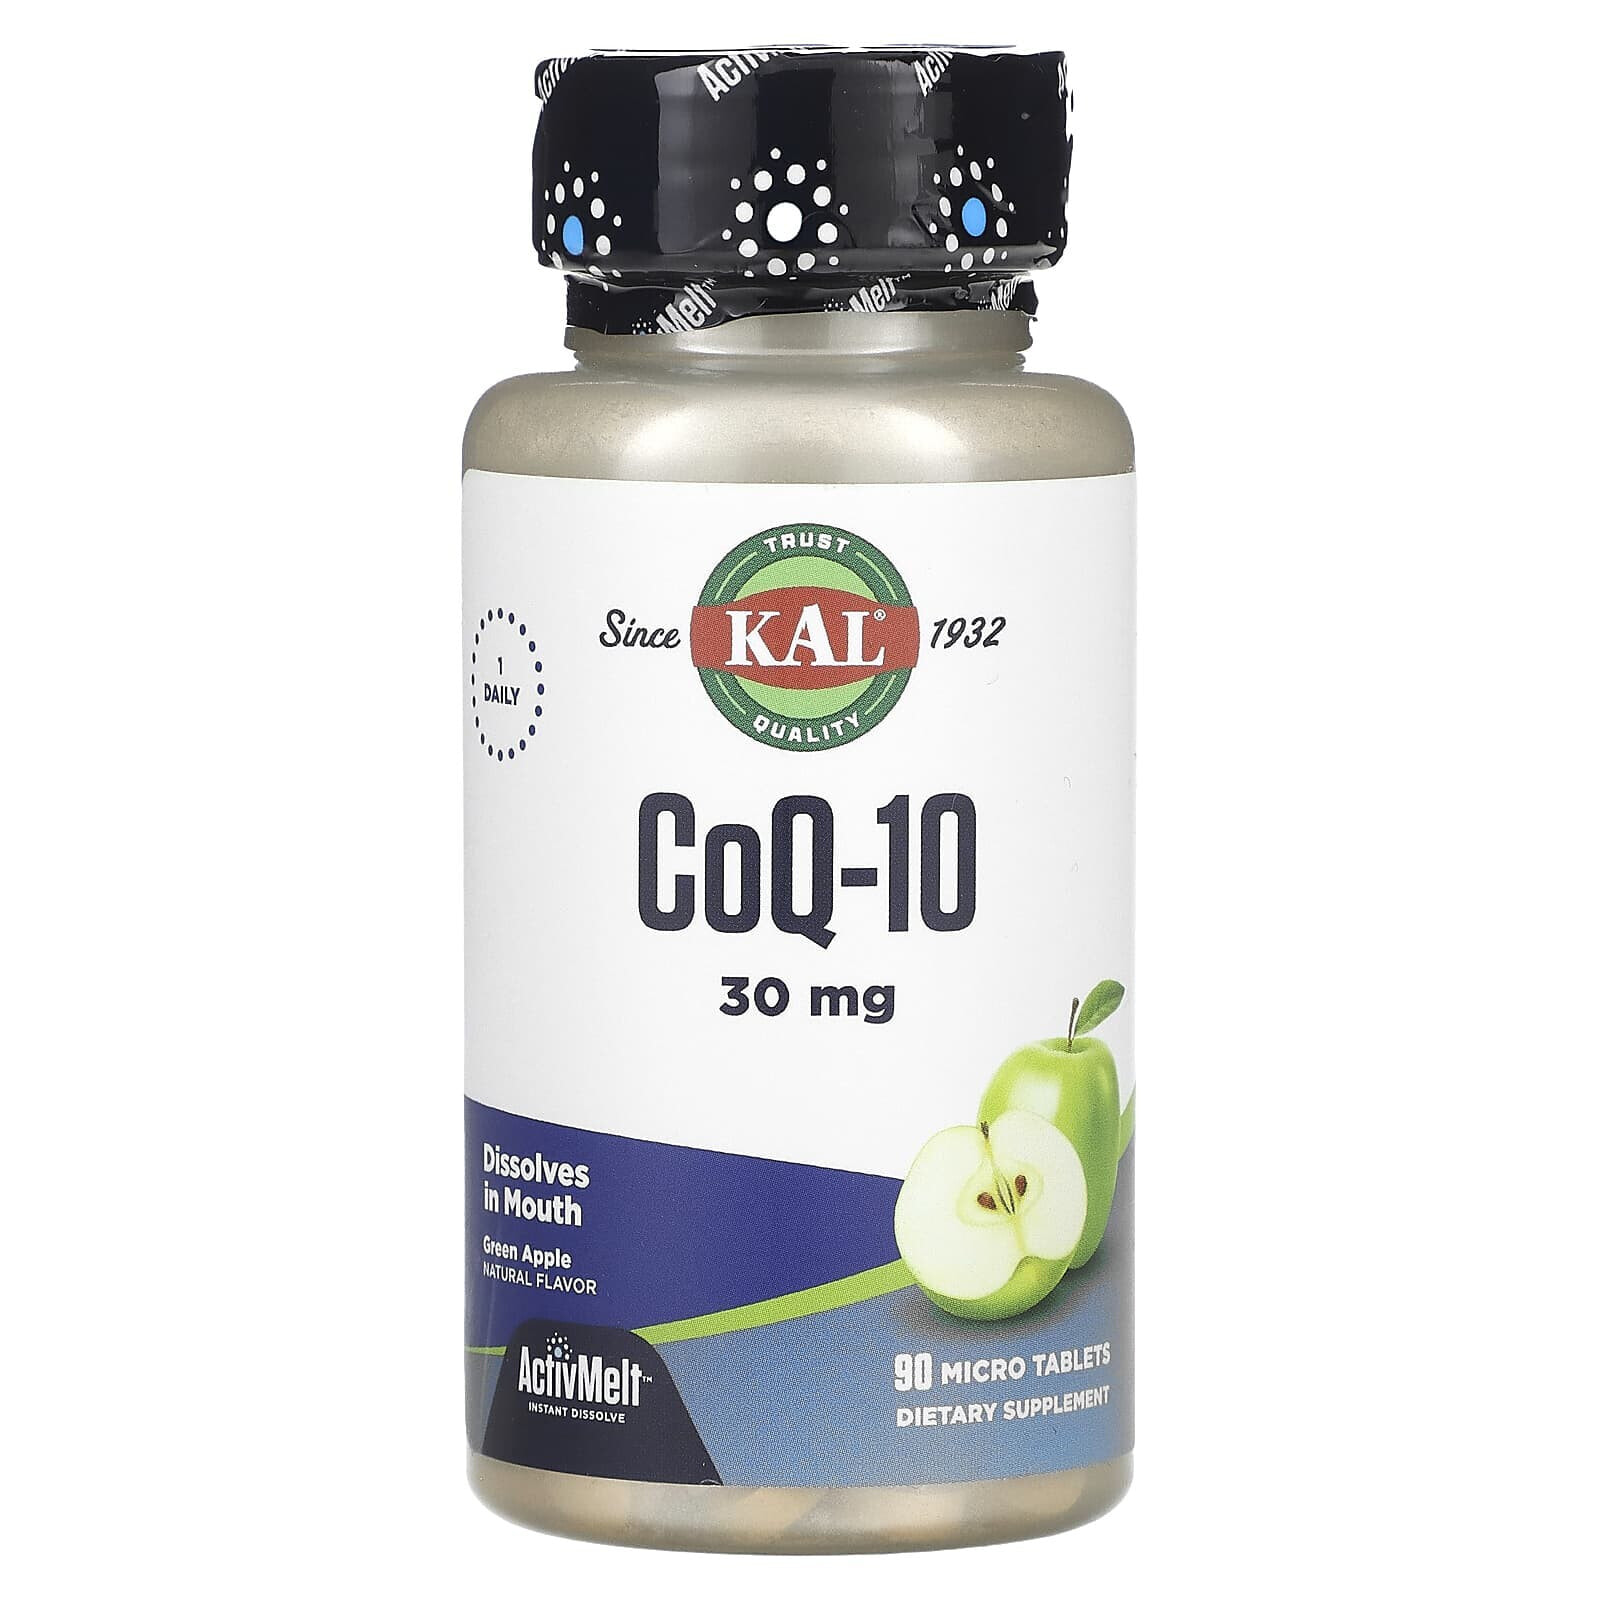 KAL, CoQ10, Green Apple, 30 mg, 90 Micro Tablets (Товар снят с продажи) 